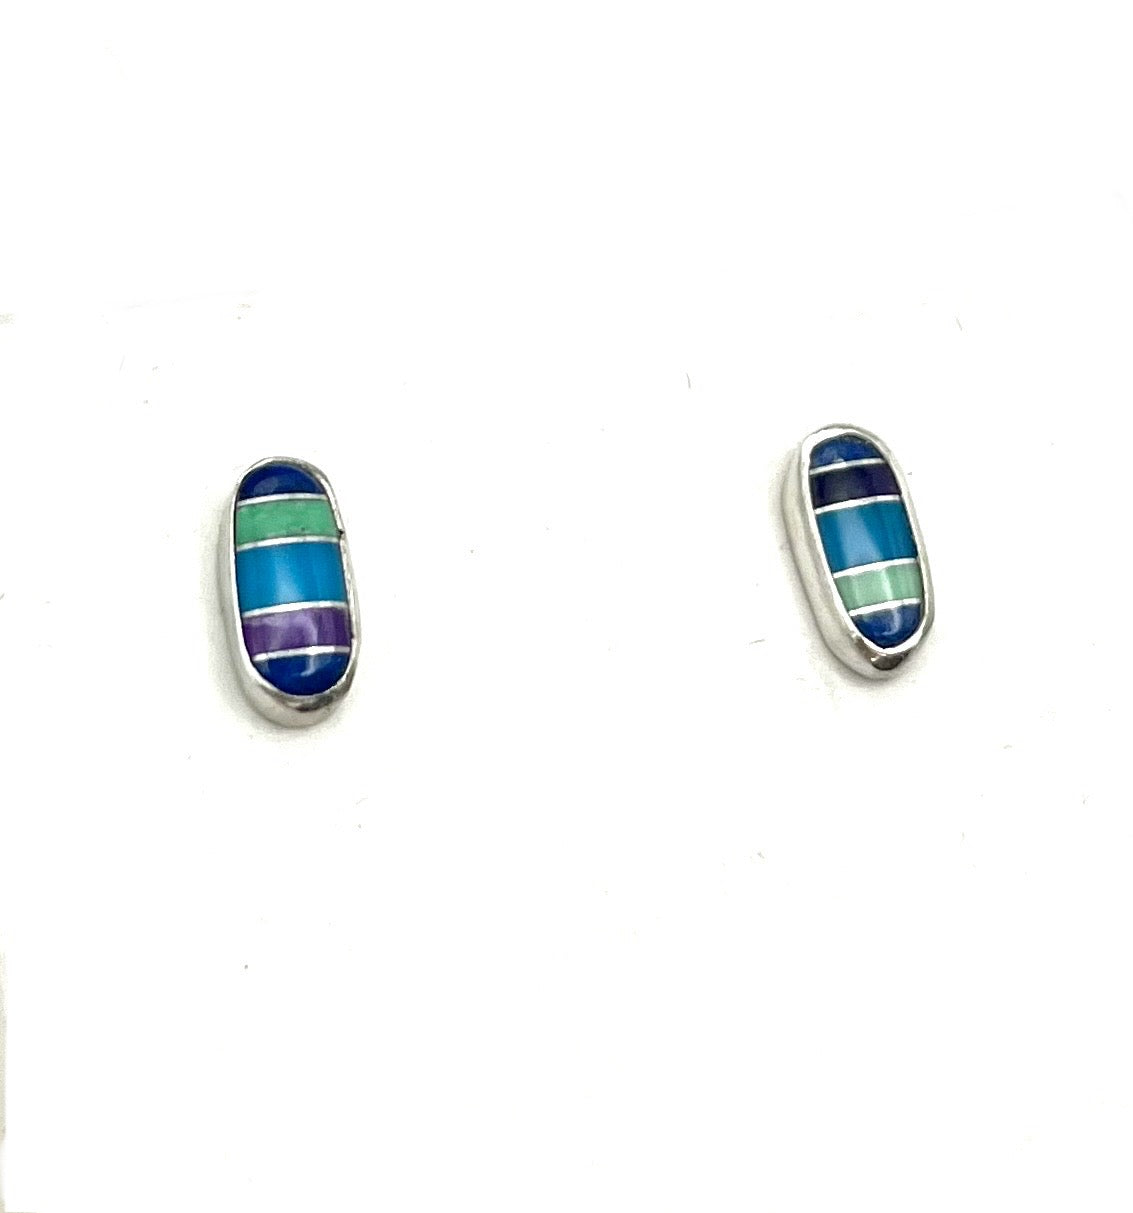 Inlay Earrings: Oval Studs